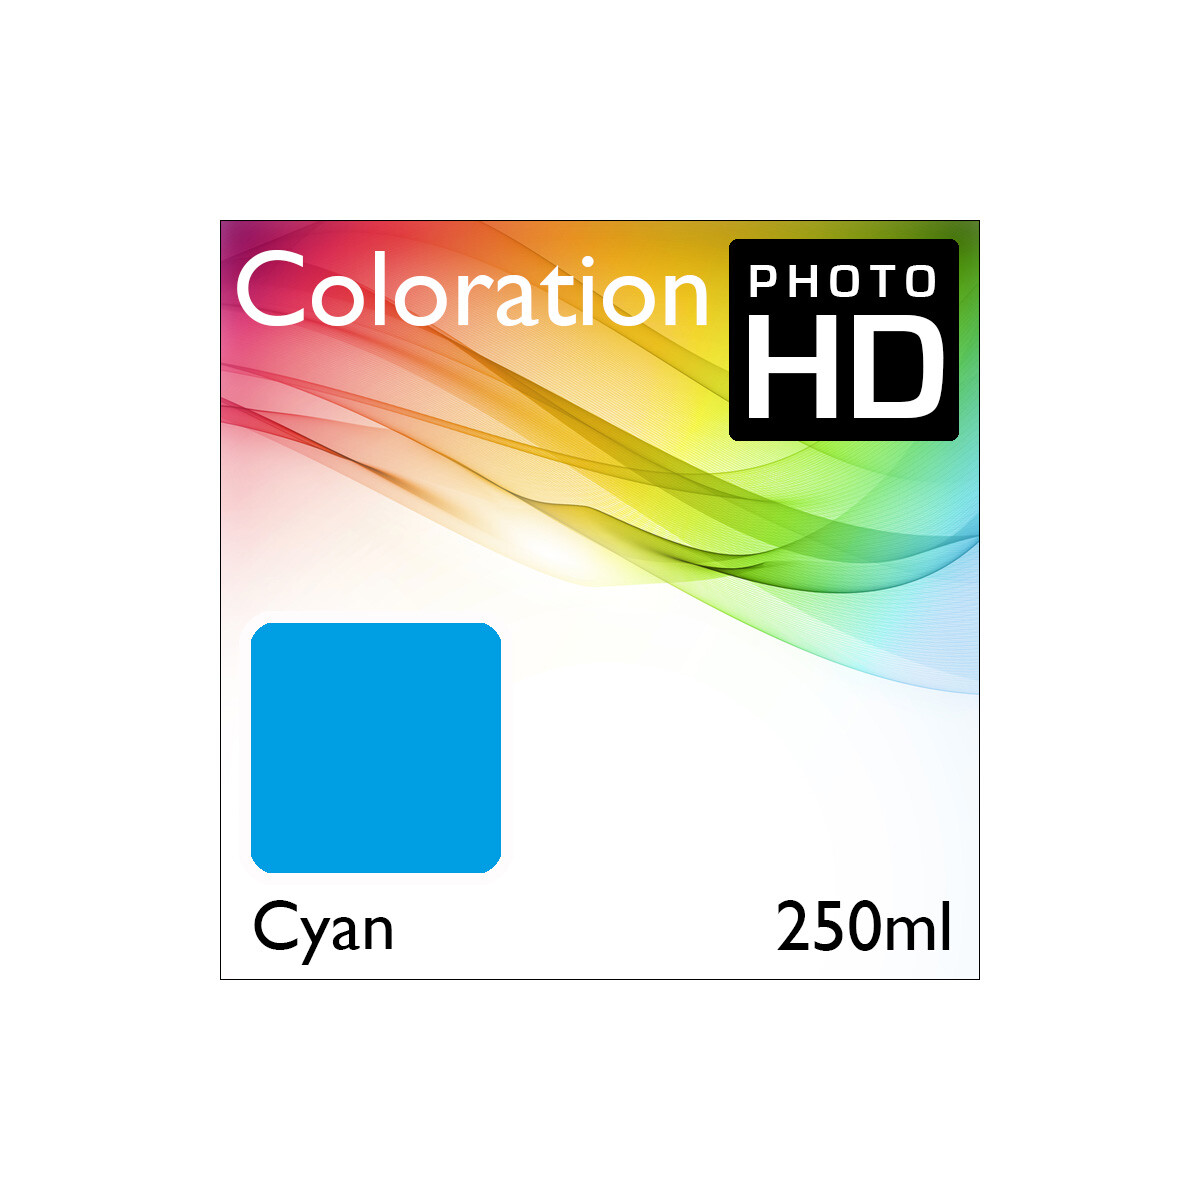 Coloration PhotoHD Bottle Cyan 250ml